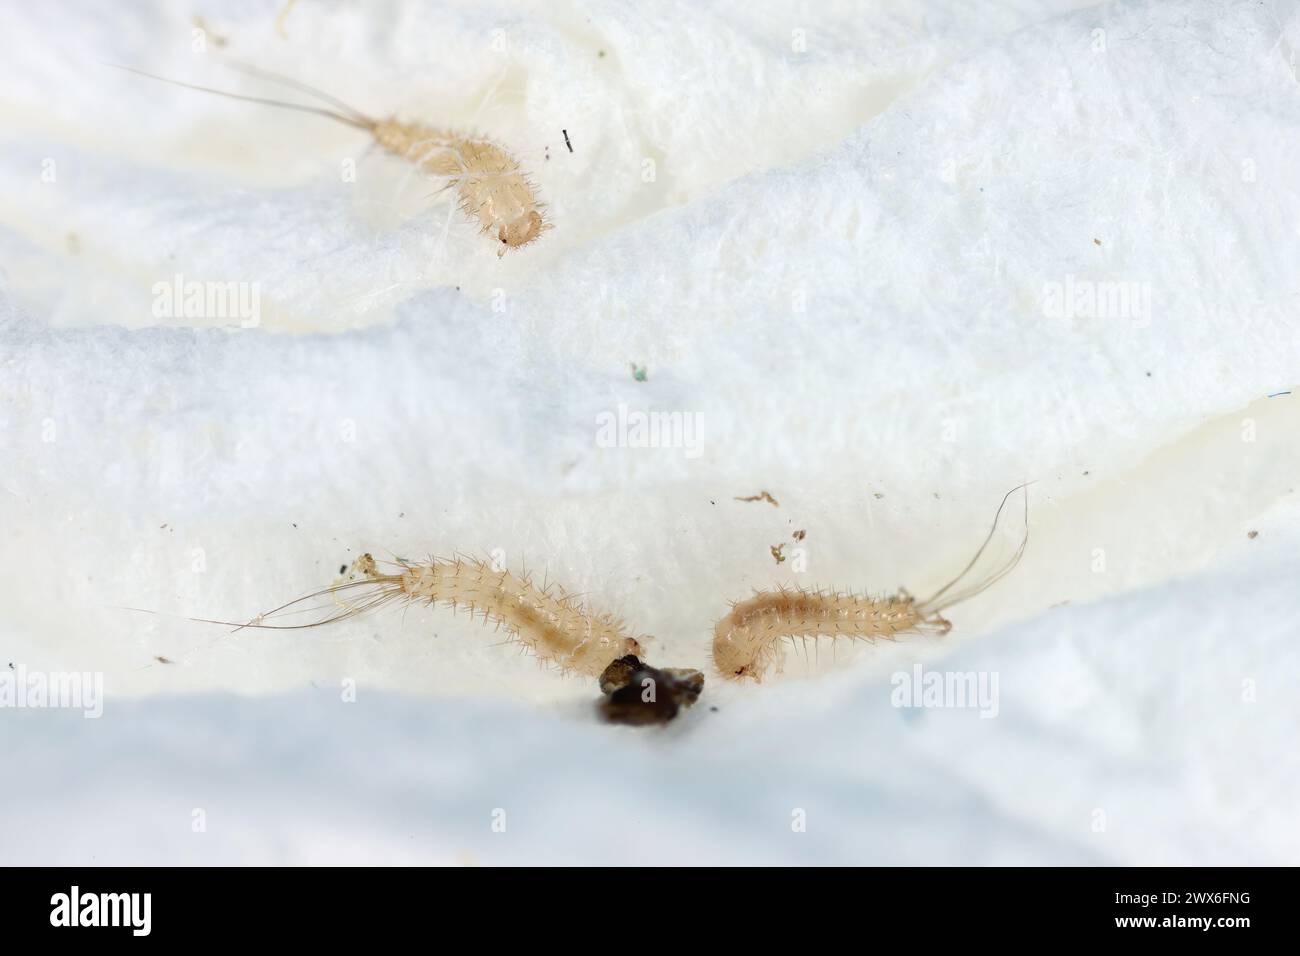 Attagenus bifasciatus, Carpet beetle. Beetles and larvae feed on food products and waste. Young larvae. Stock Photo